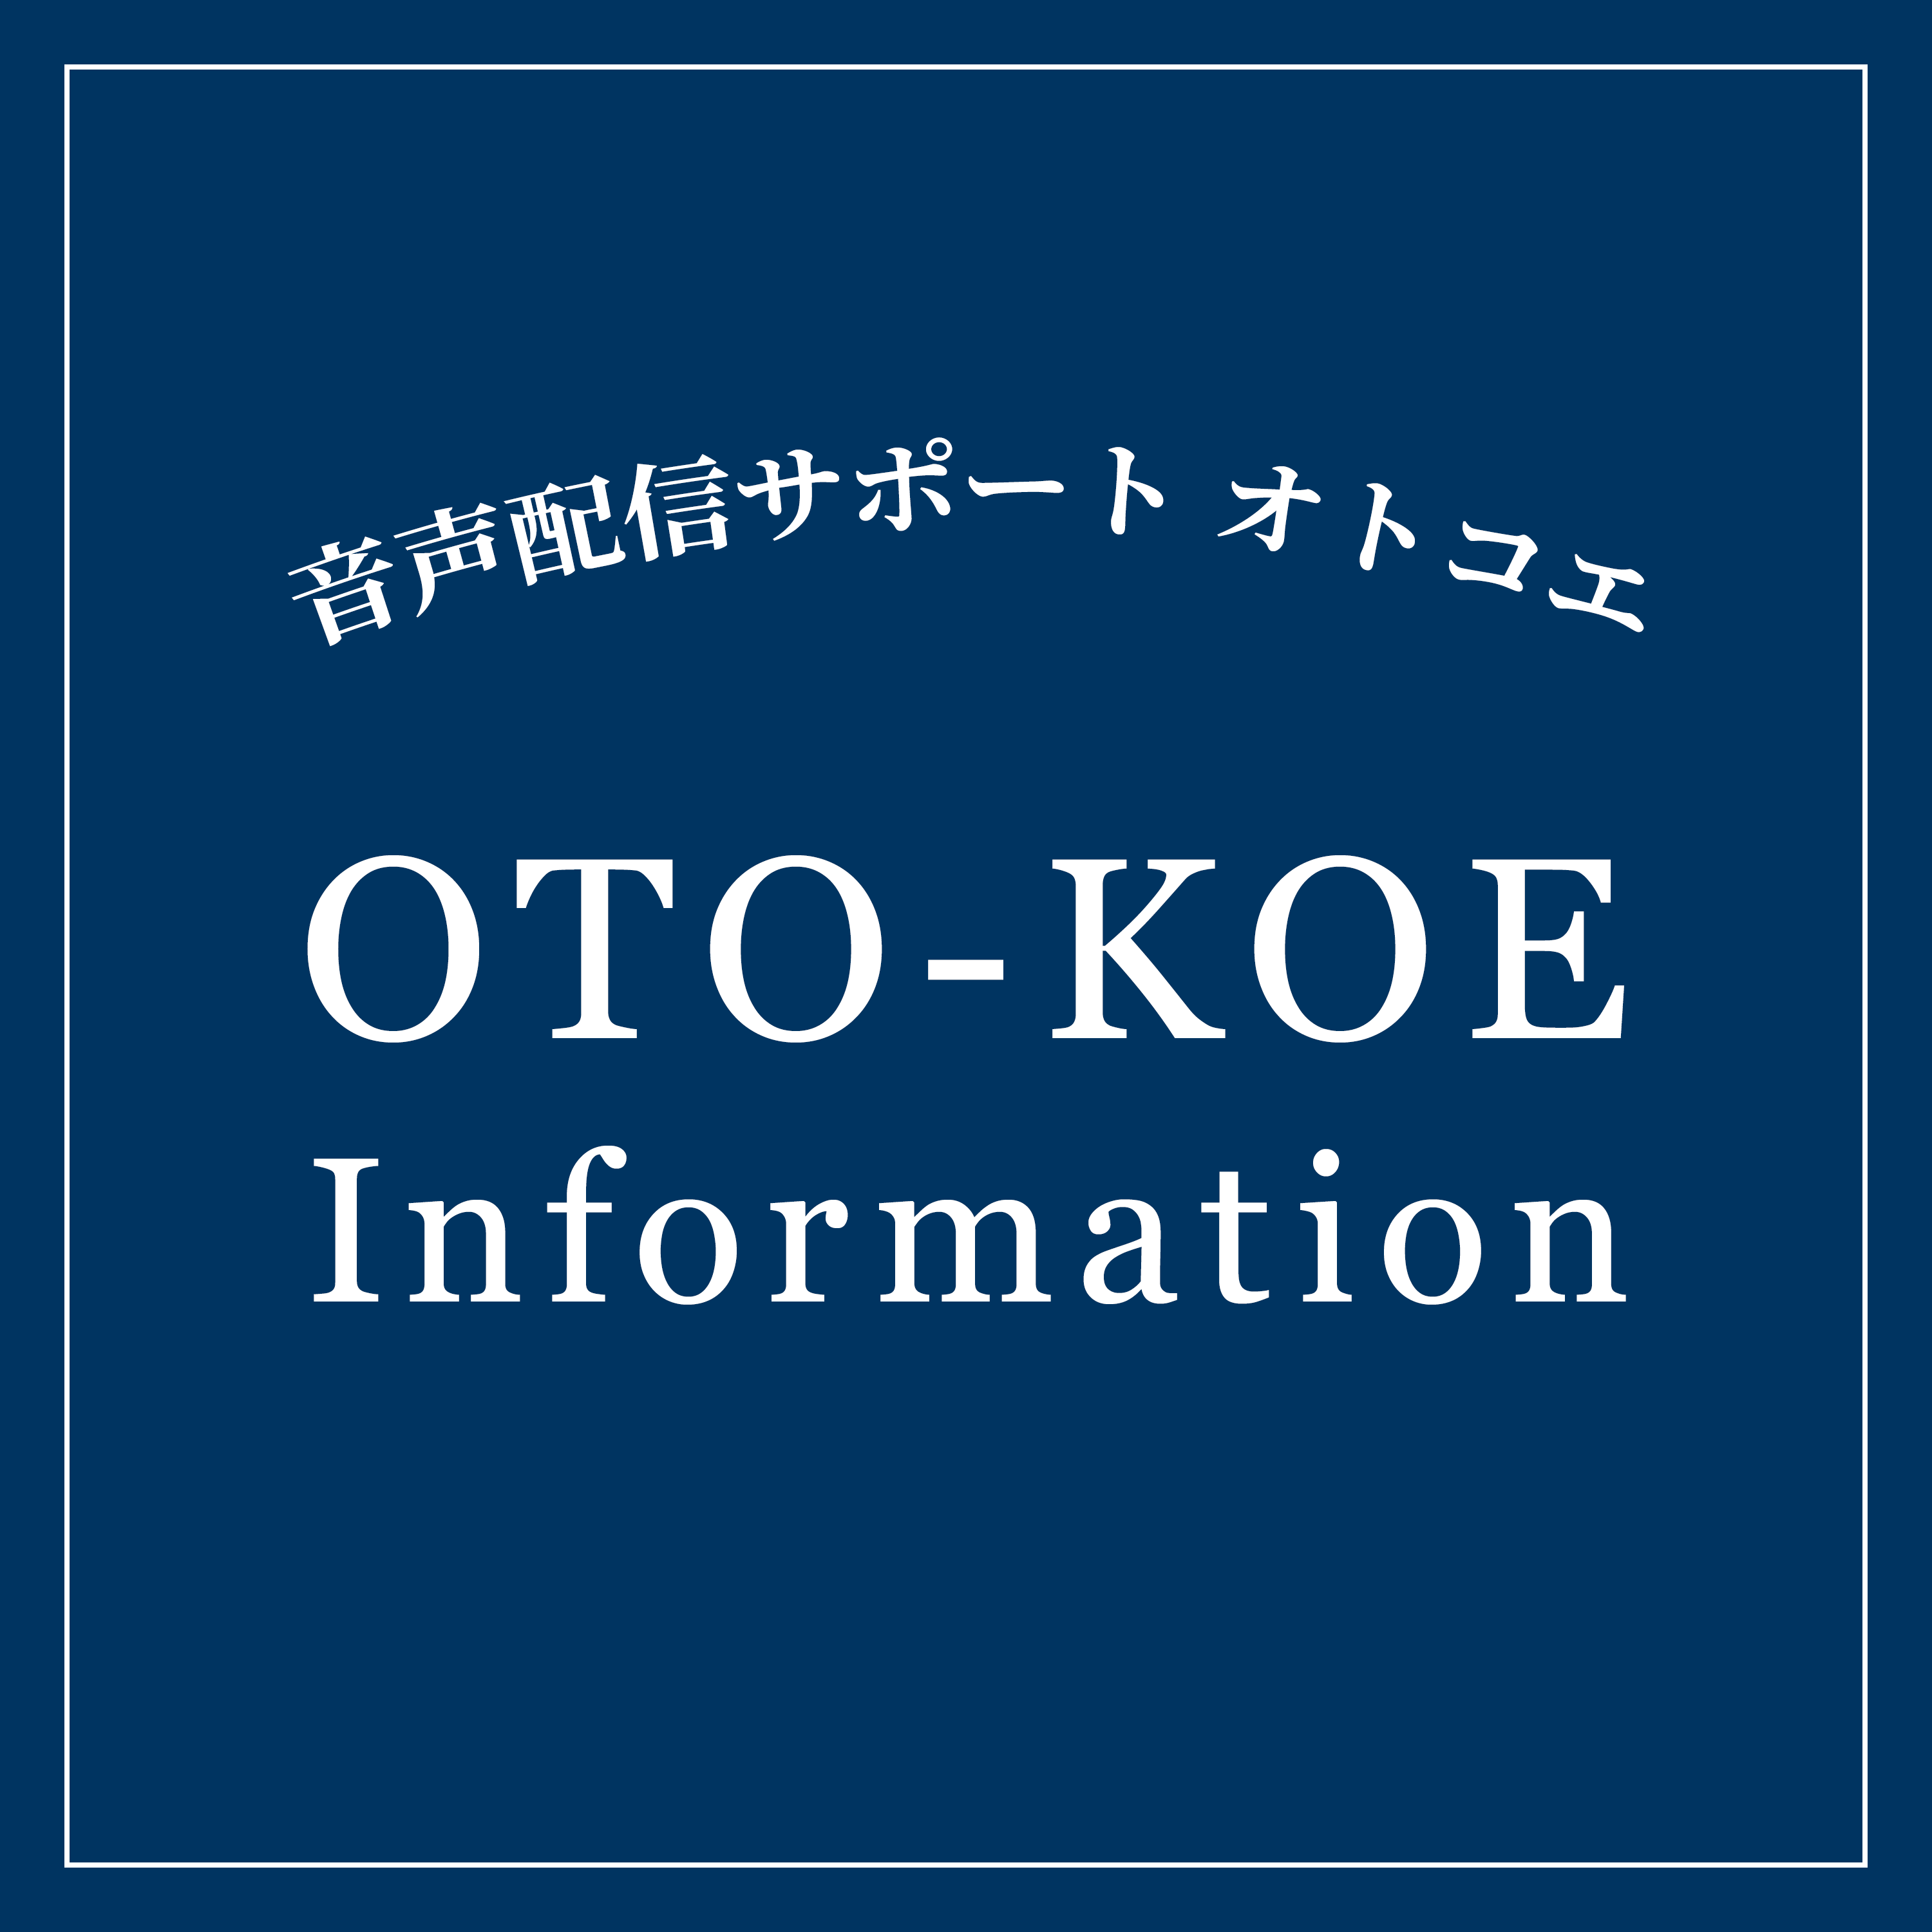 OTO-KOE Information